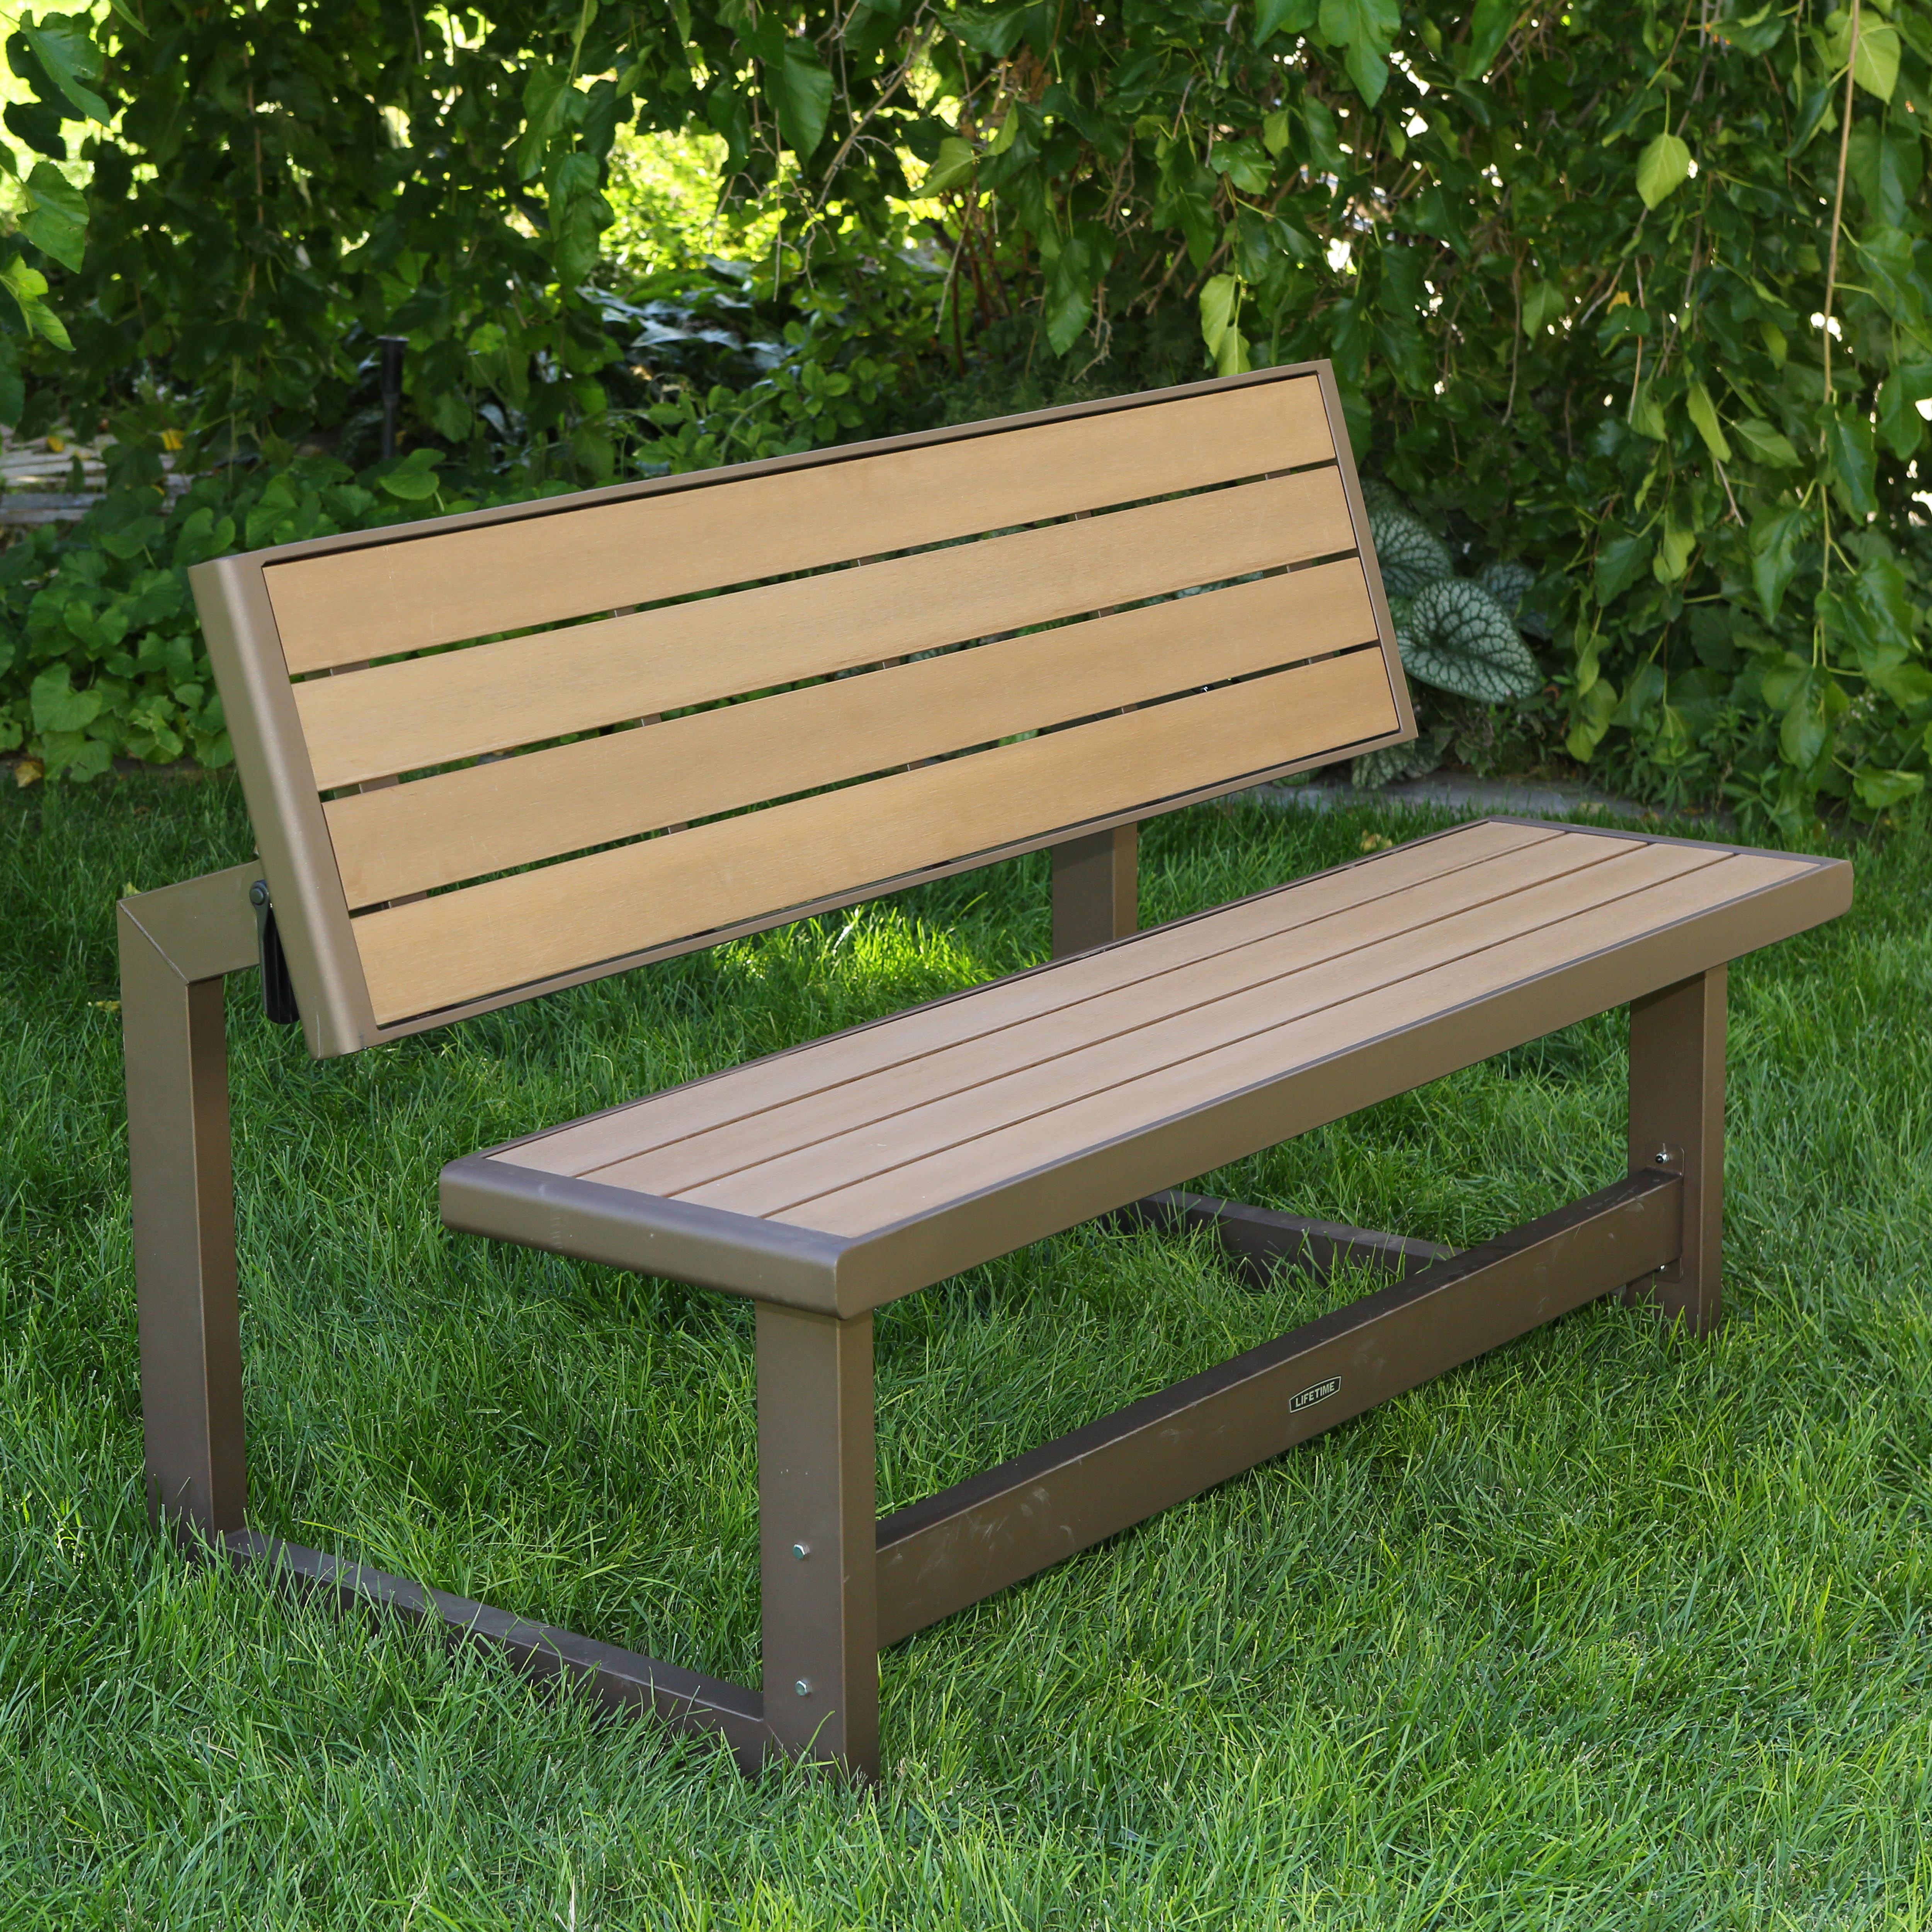 Lifetime Outdoor Convertible Bench, Light Brown, 60139 - 2